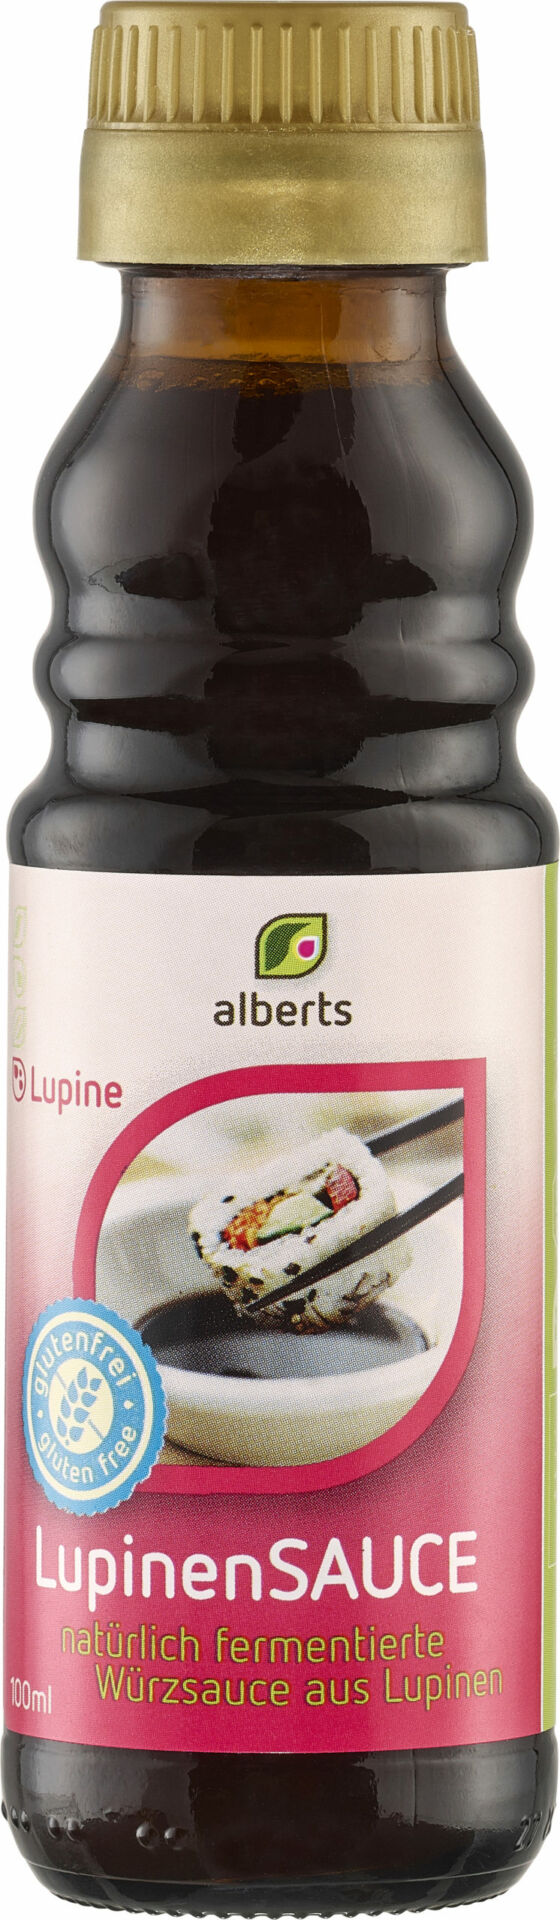 Alberts Lupinensauce natürlich fermentierte Würzsauce aus Lupinen 8 x 100ml